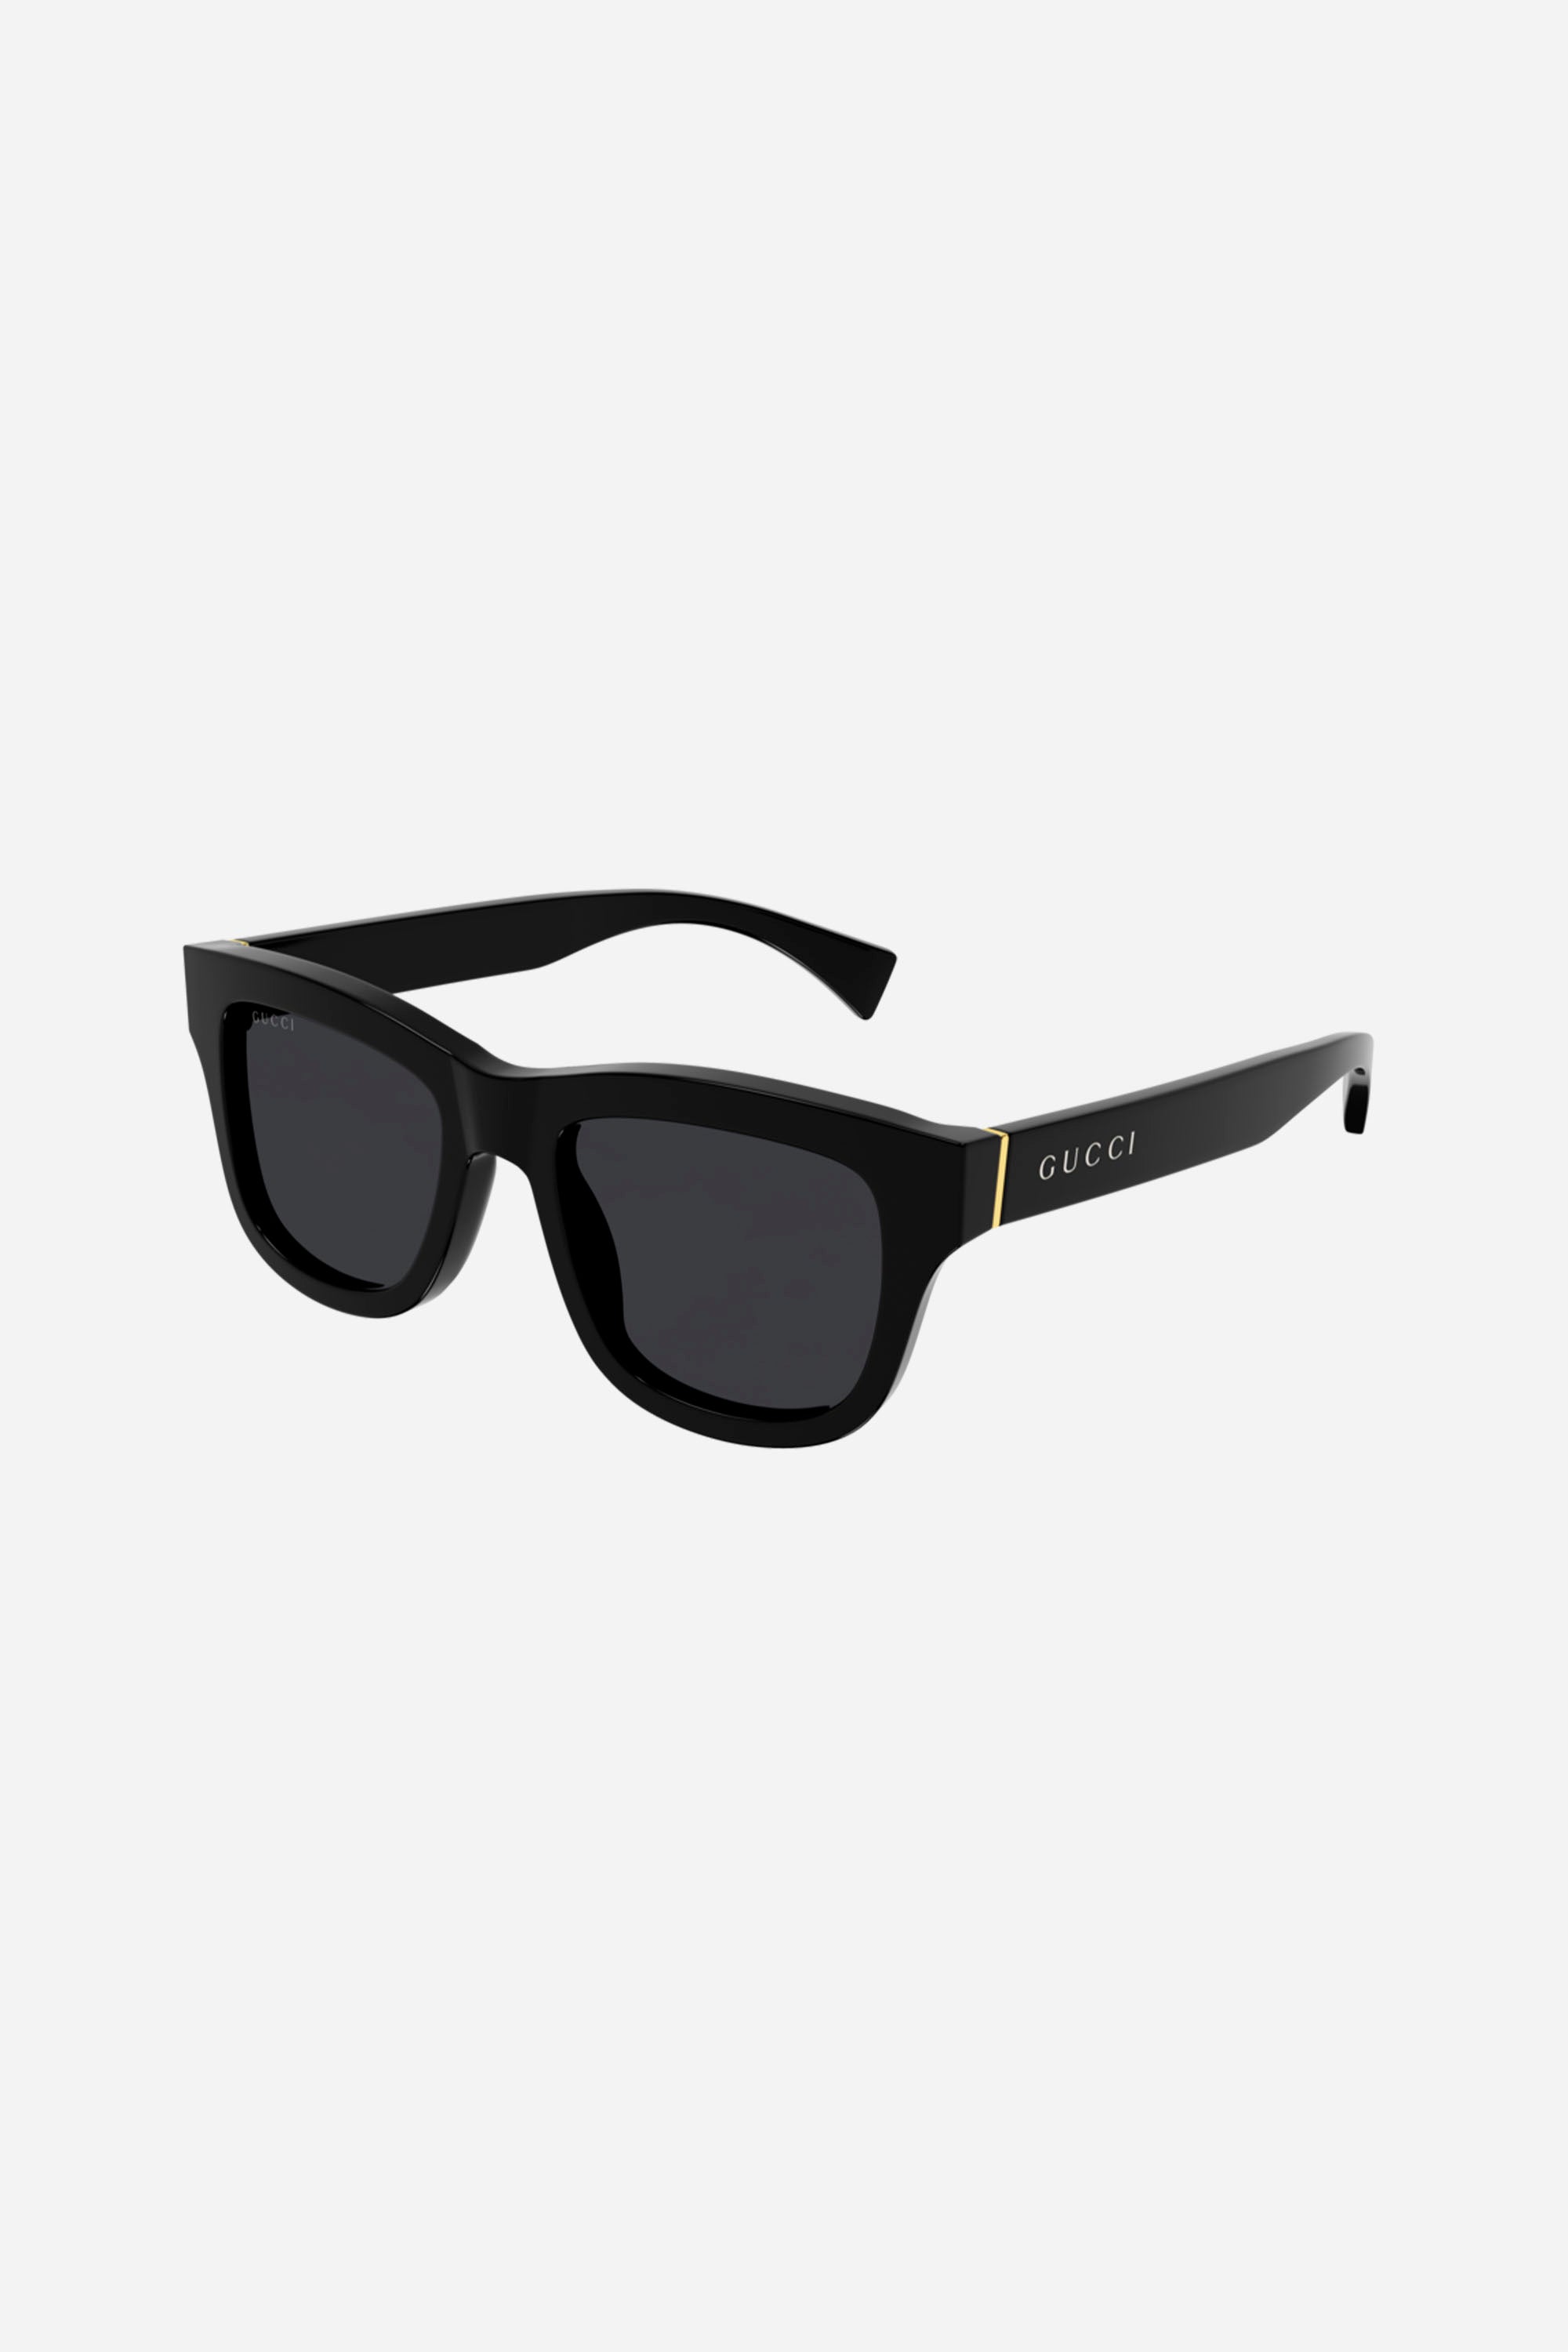 Gucci soft squared black sunglasses - Eyewear Club